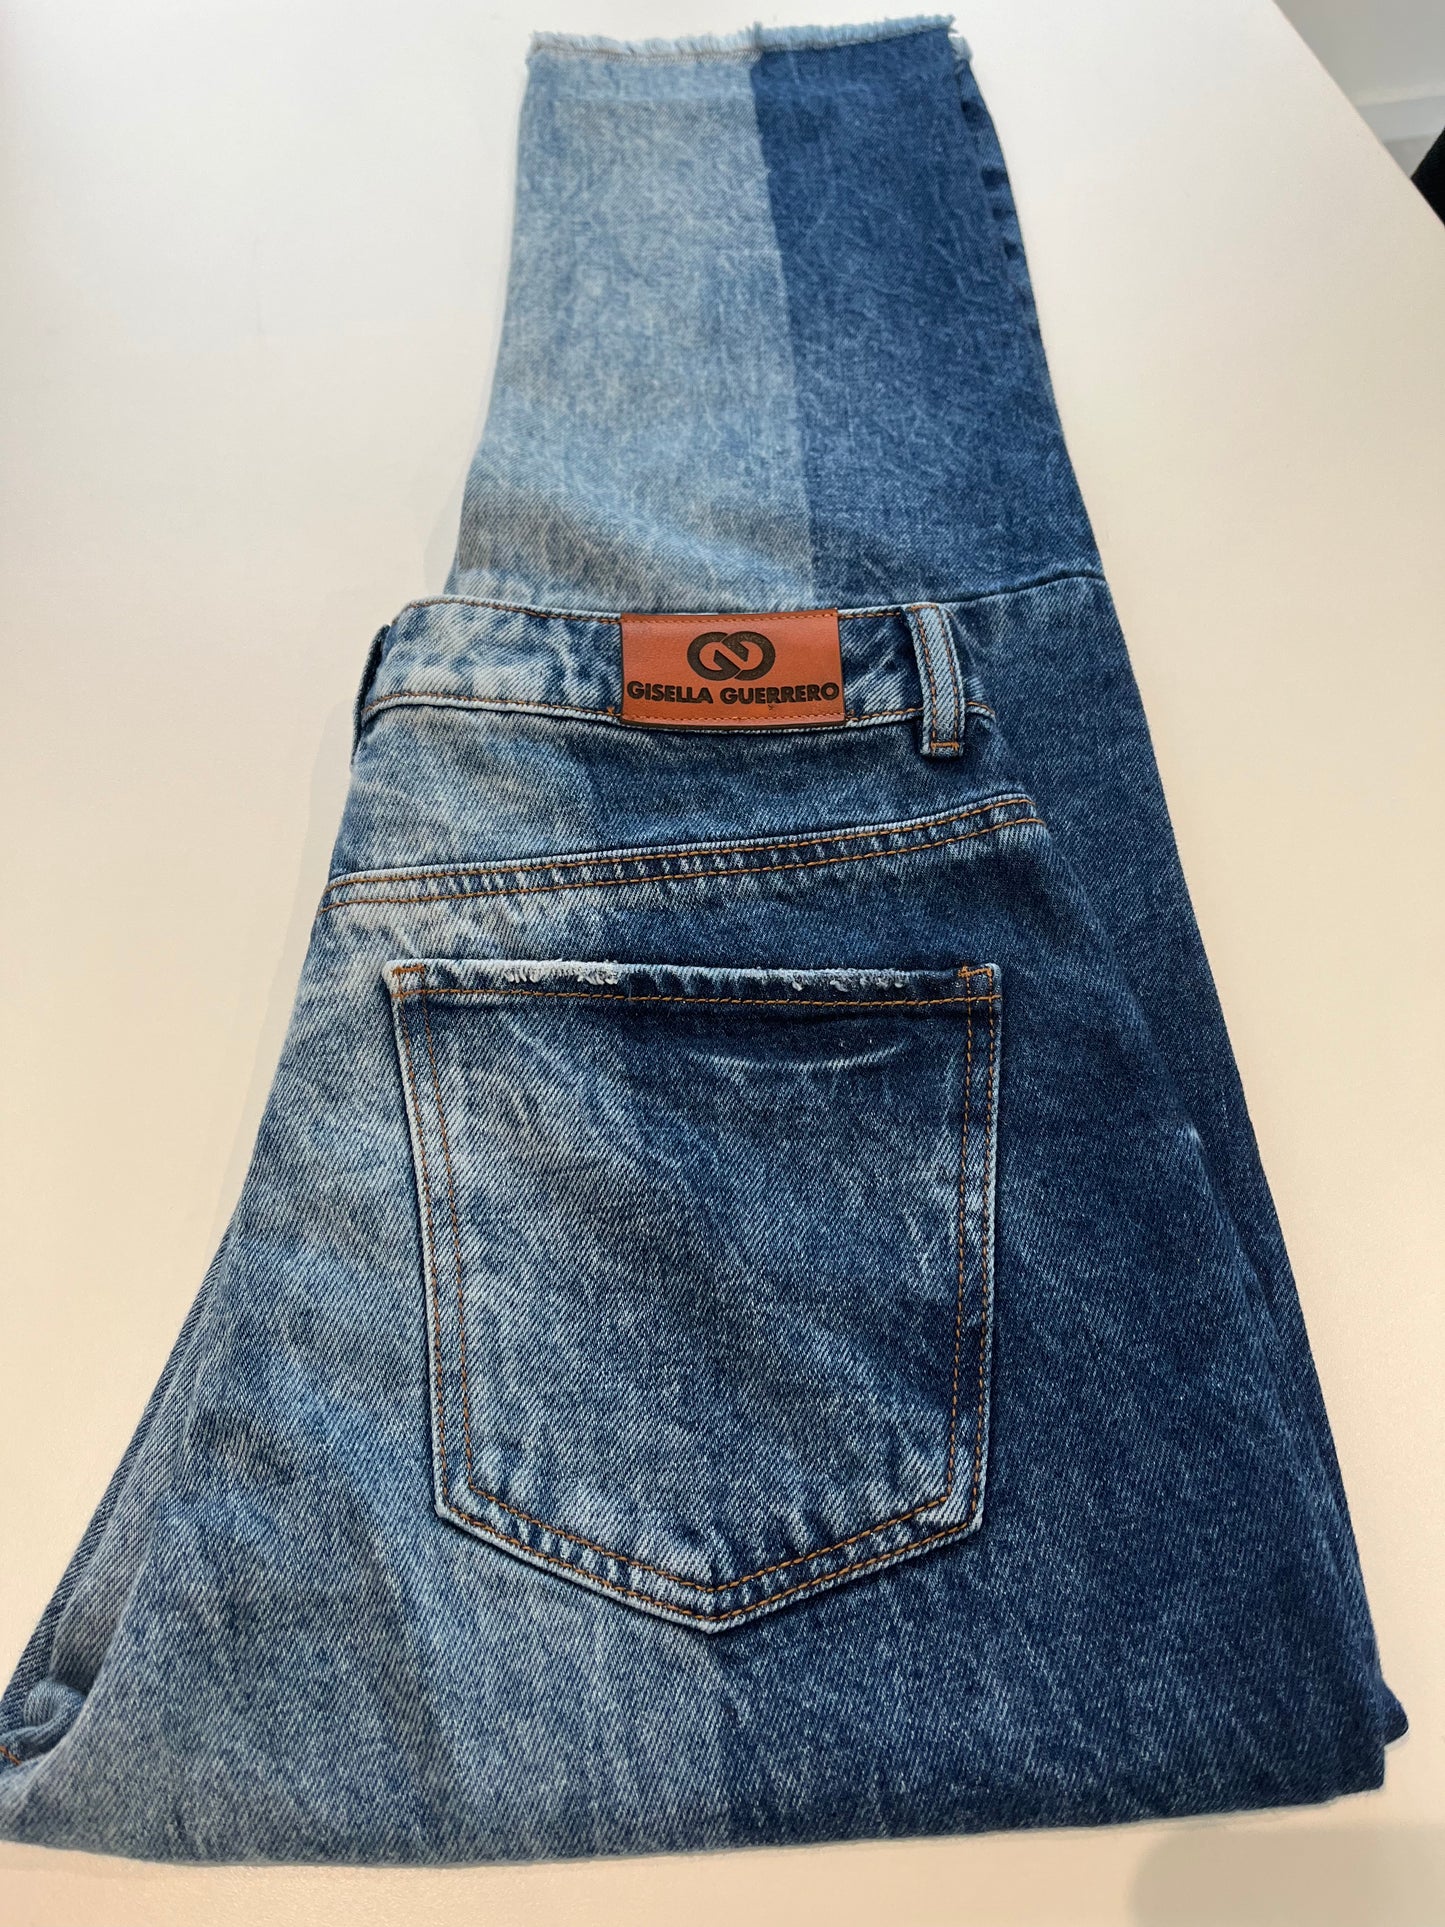 GG015: Gradient Vertical Bicolor Jeans